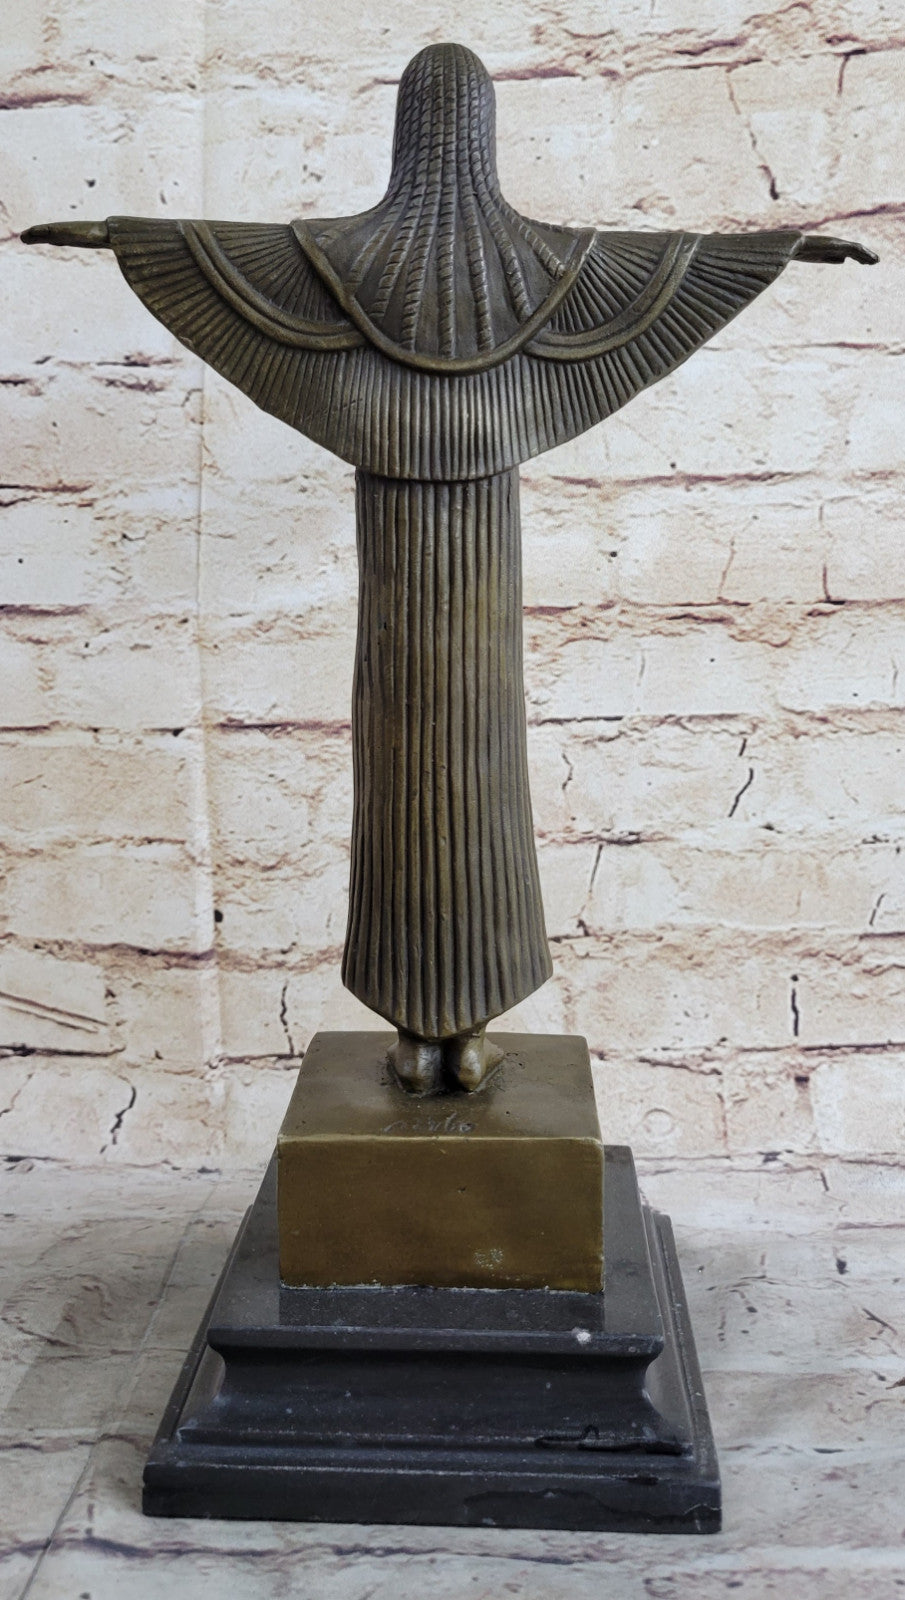 Princess Statue Sculpture Handmade Bronze on Marble Cleopatra Egyptian Figurine